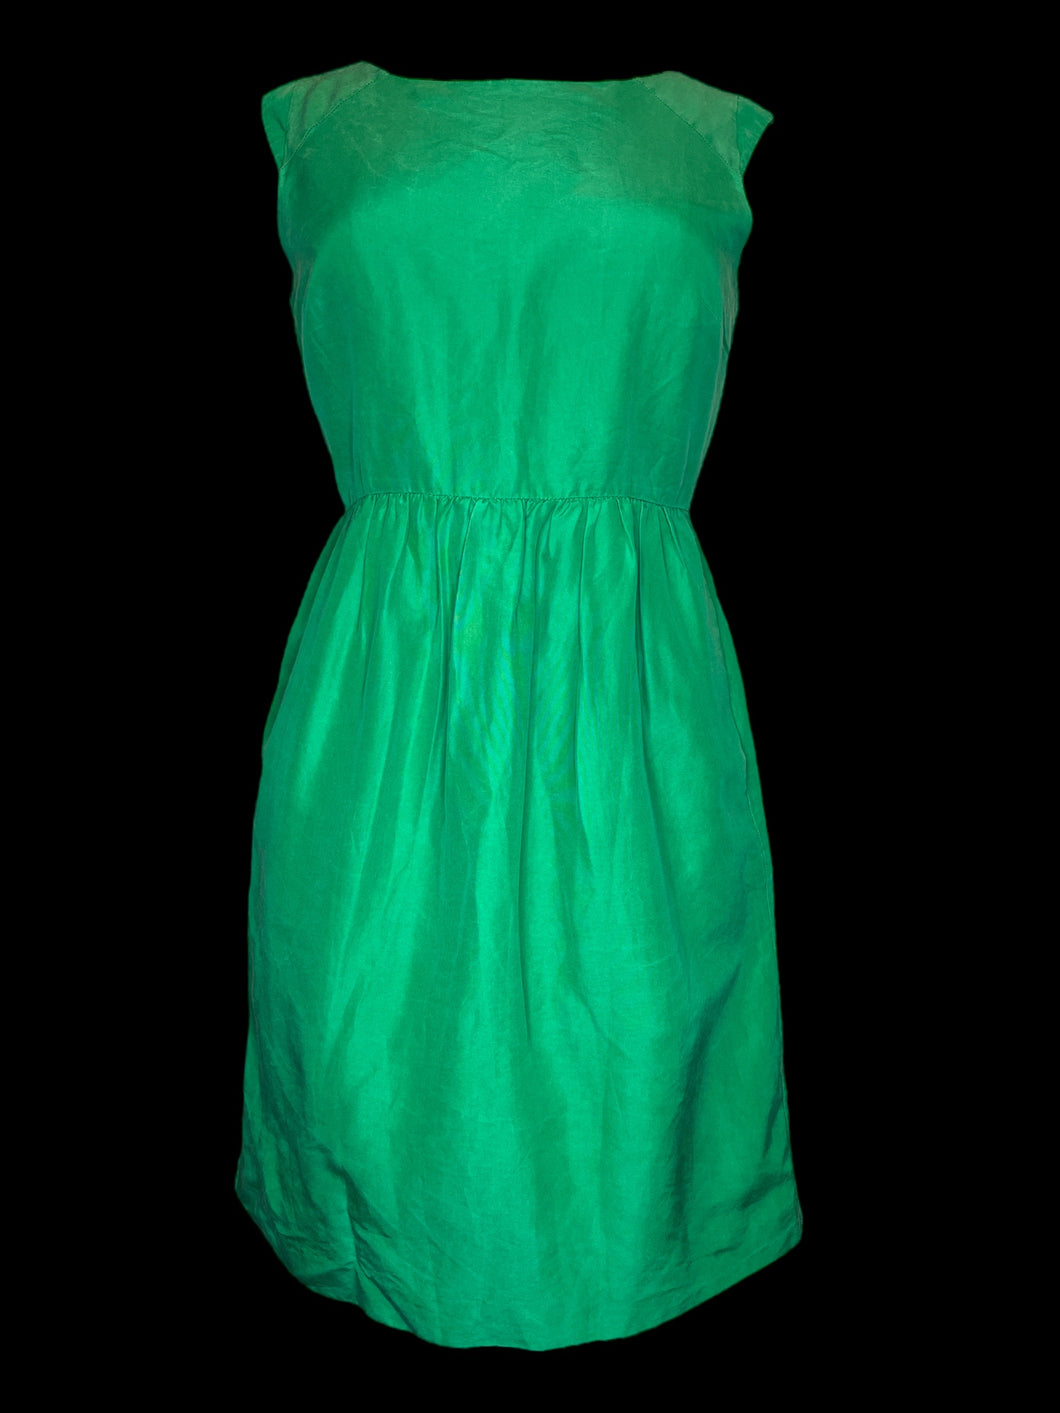 M Green sleeveless a-line dress w/ back slit on hem, satin-like lining, pockets, & clasp/zipper closure